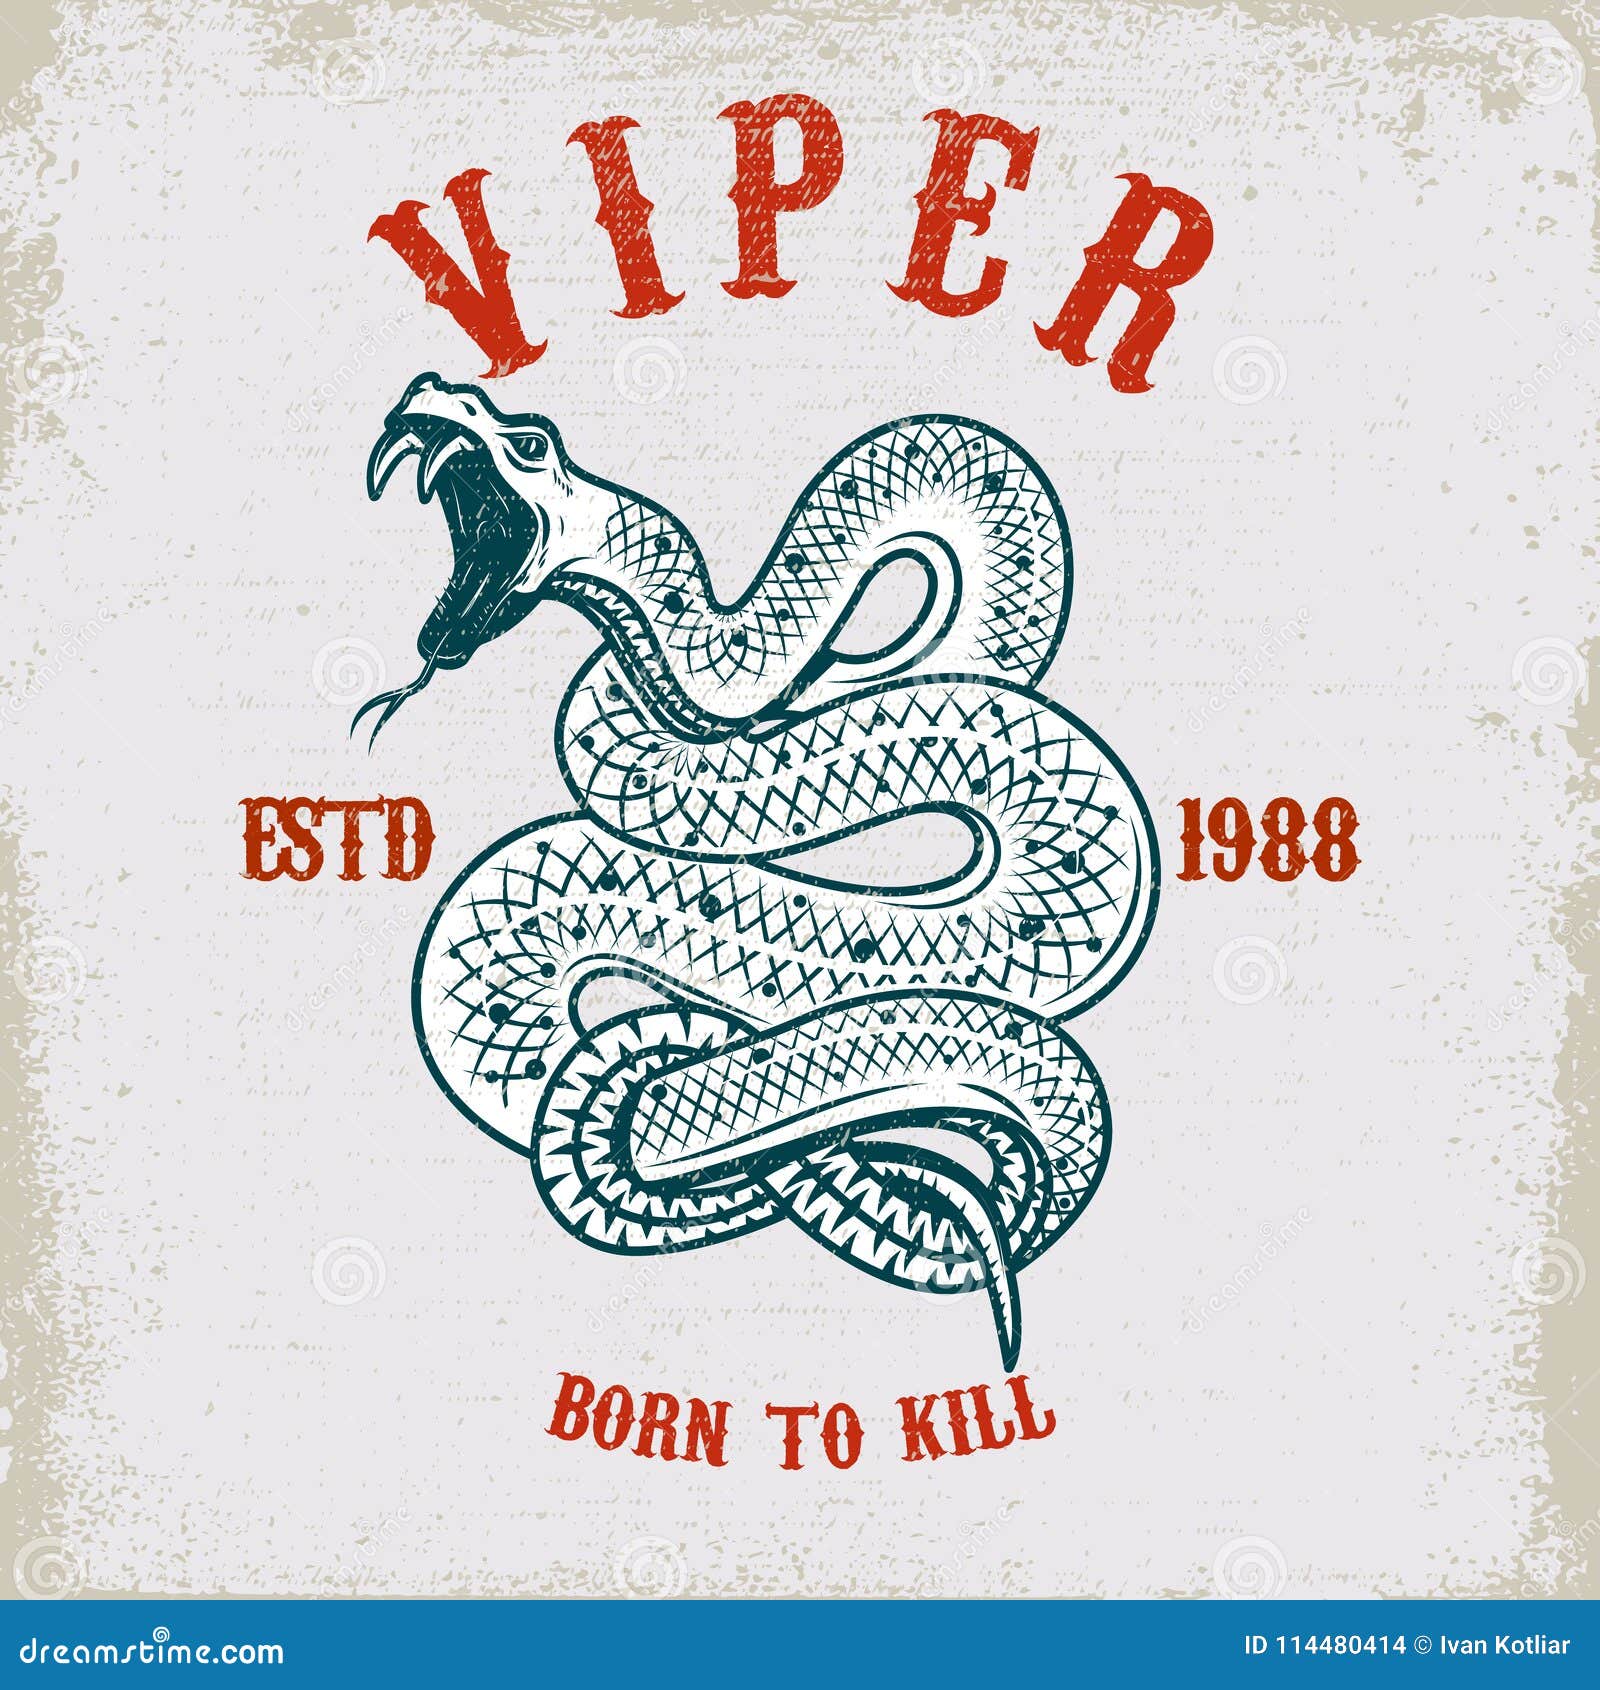 viper snake  on grunge background.   for poster, card, t shirt.